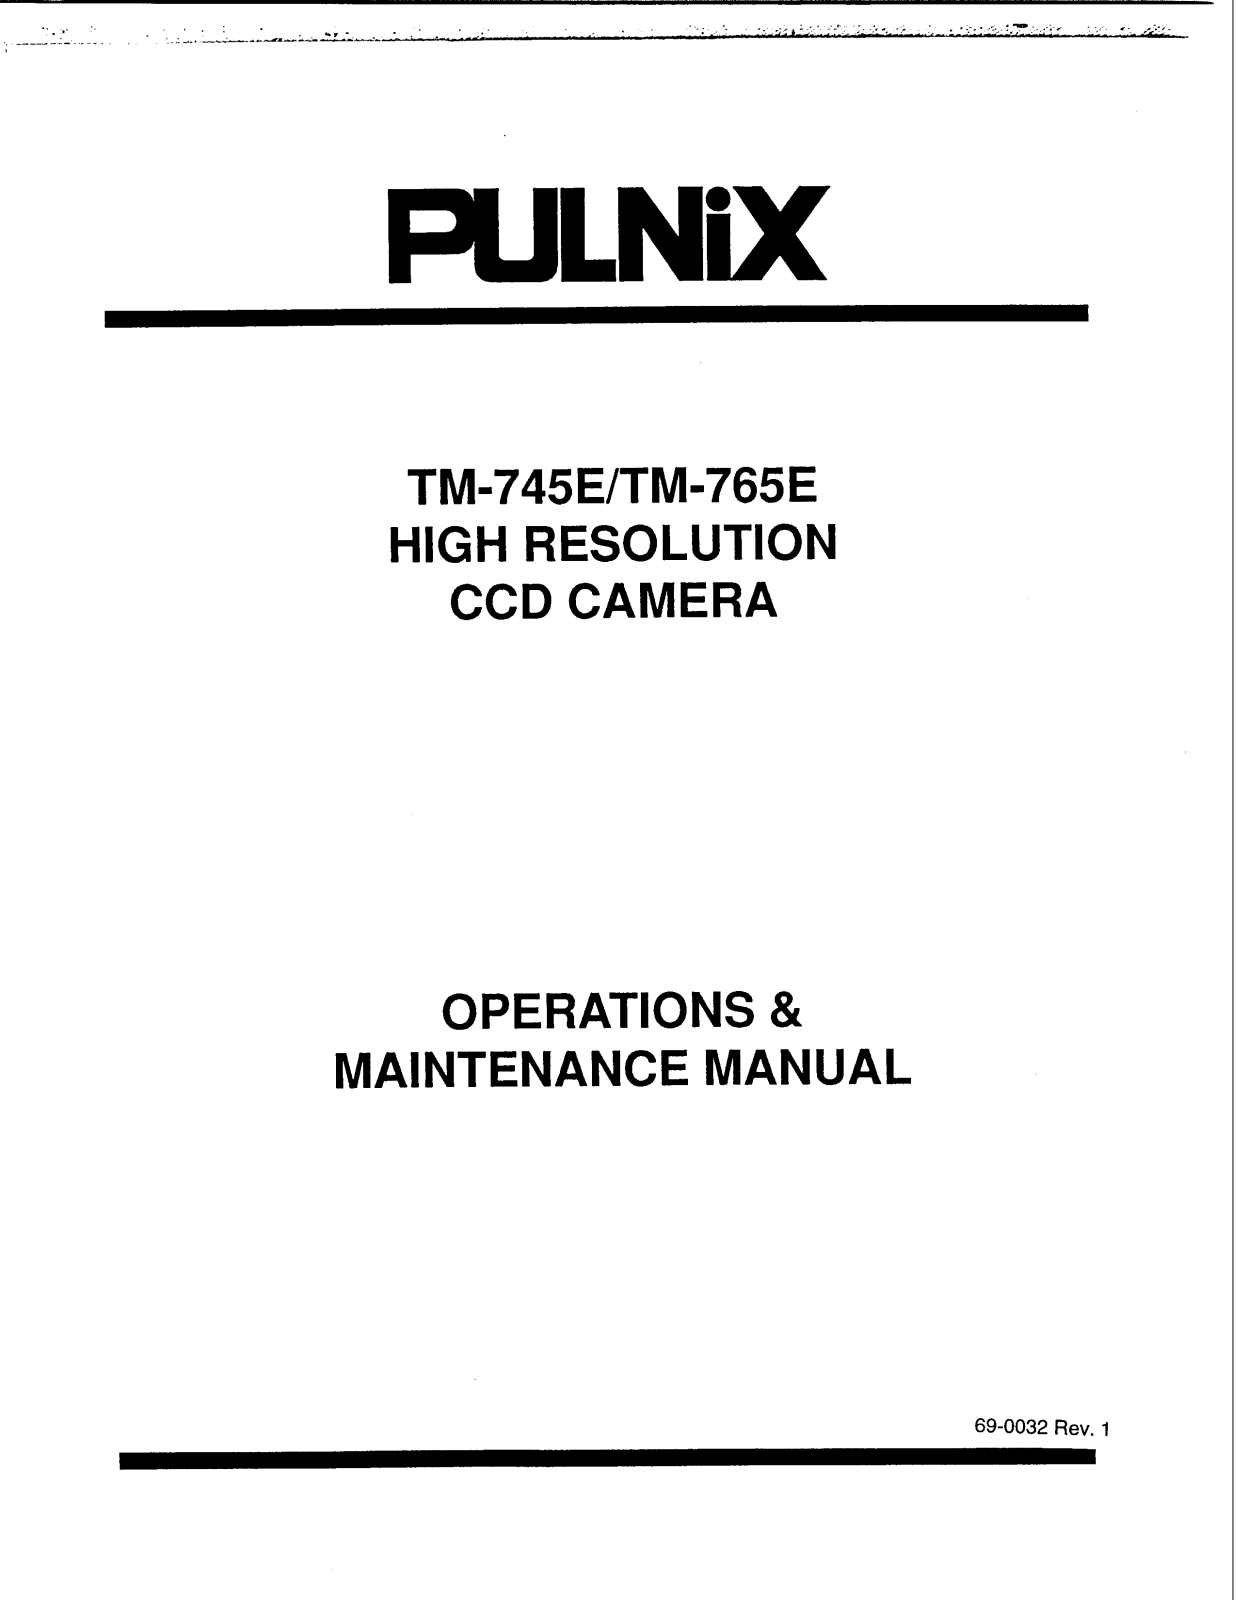 PULNiX TM-745E, TM-765E User Manual